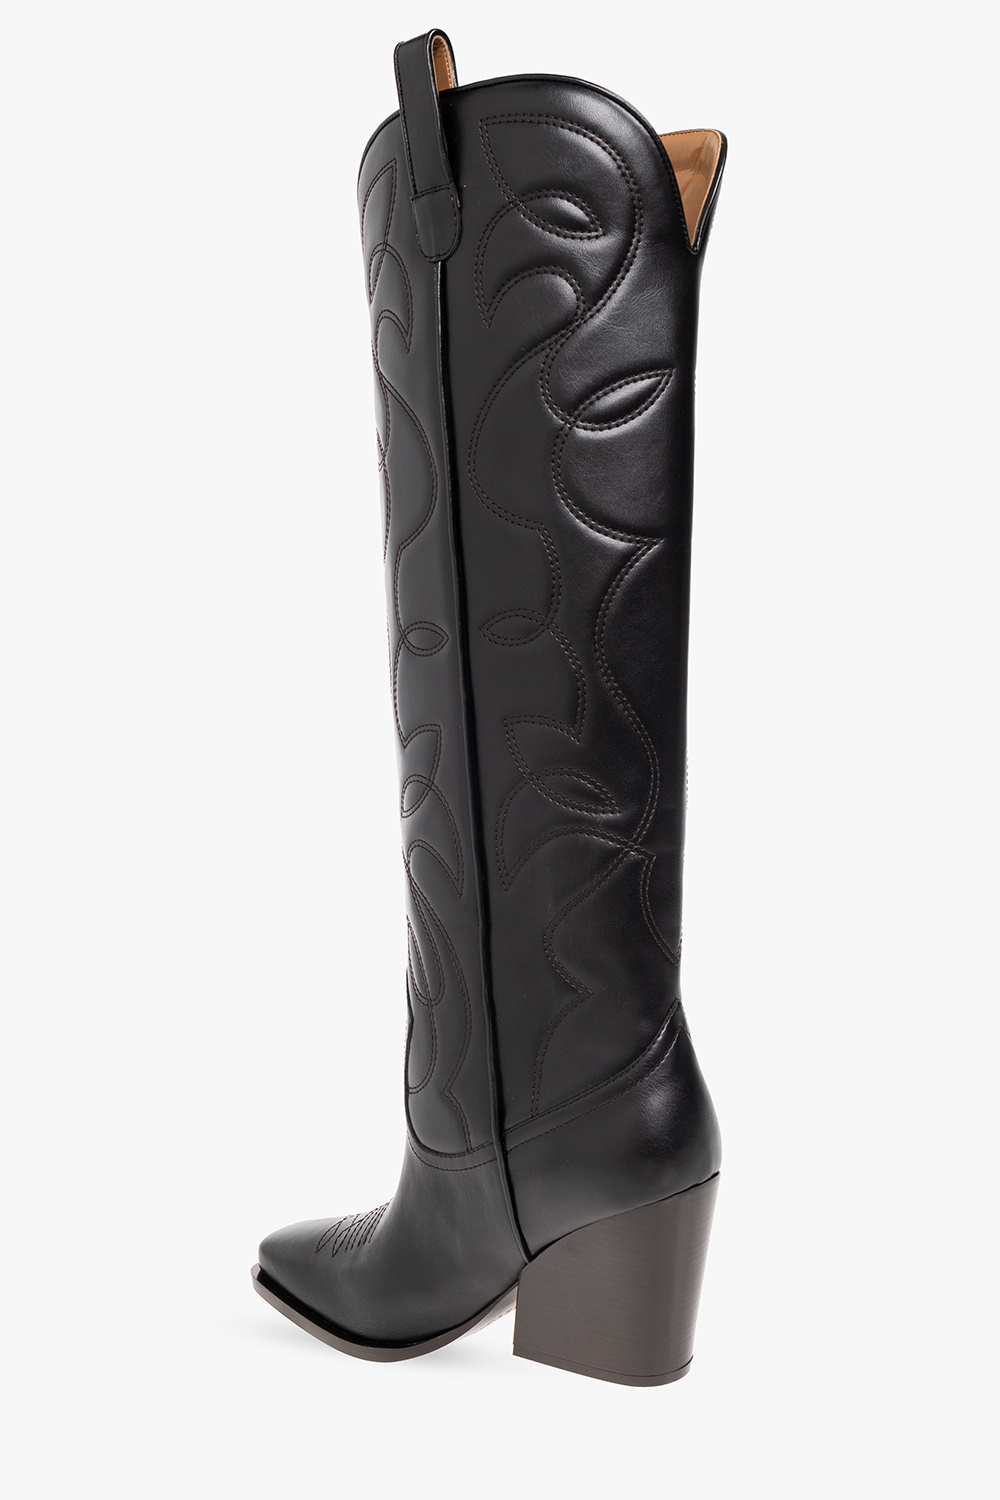 Stella McCartney ‘Cowboy’ heeled boots